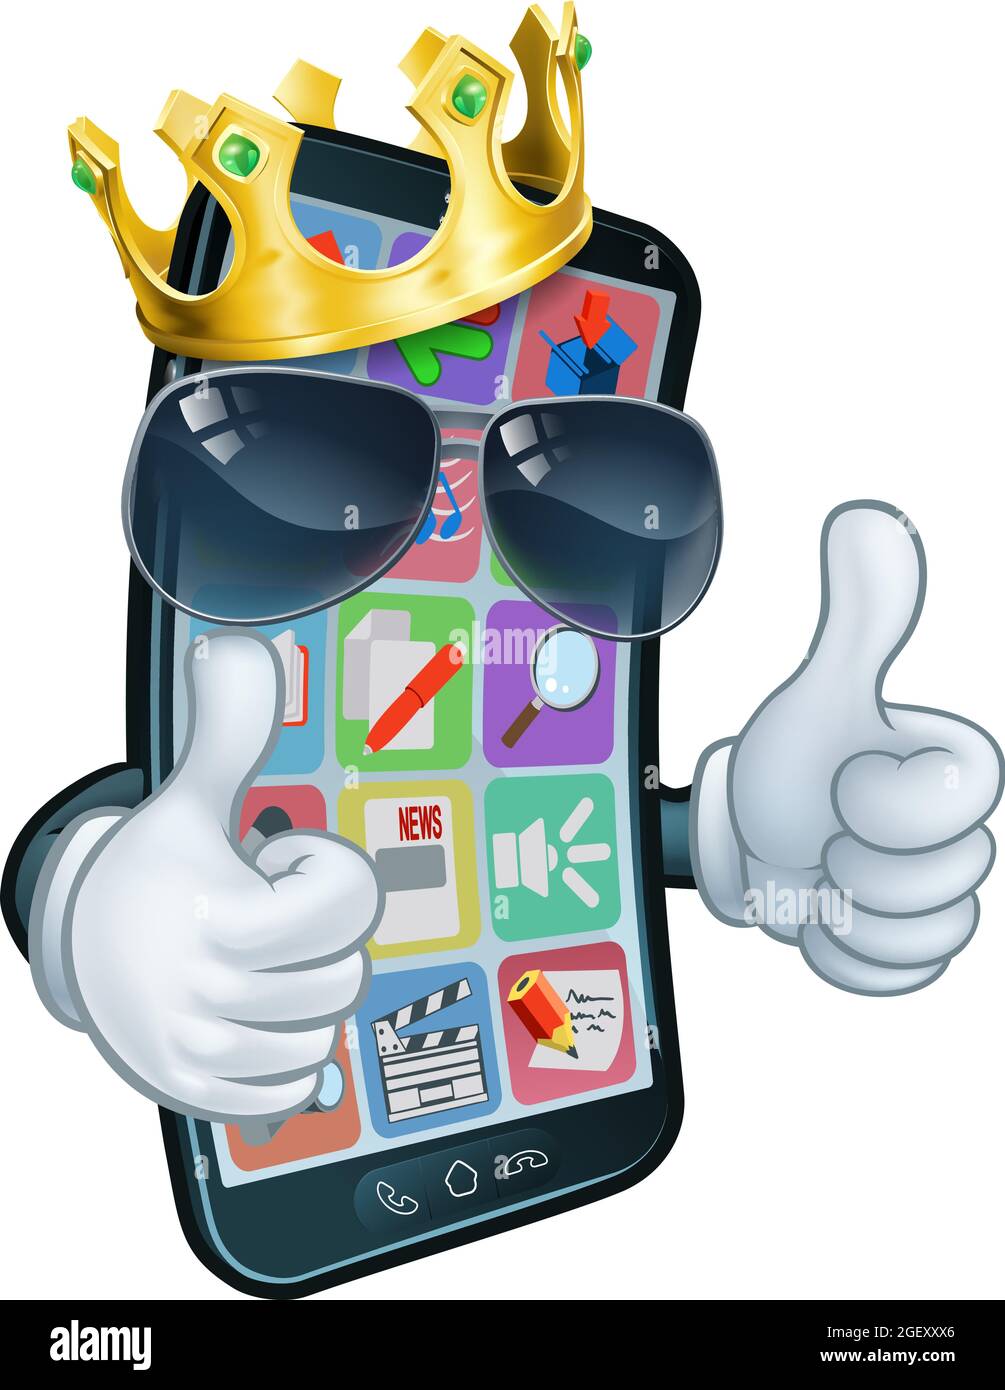 Mobile Phone Cool King Thumbs Up Cartoon Mascot Stock Vector